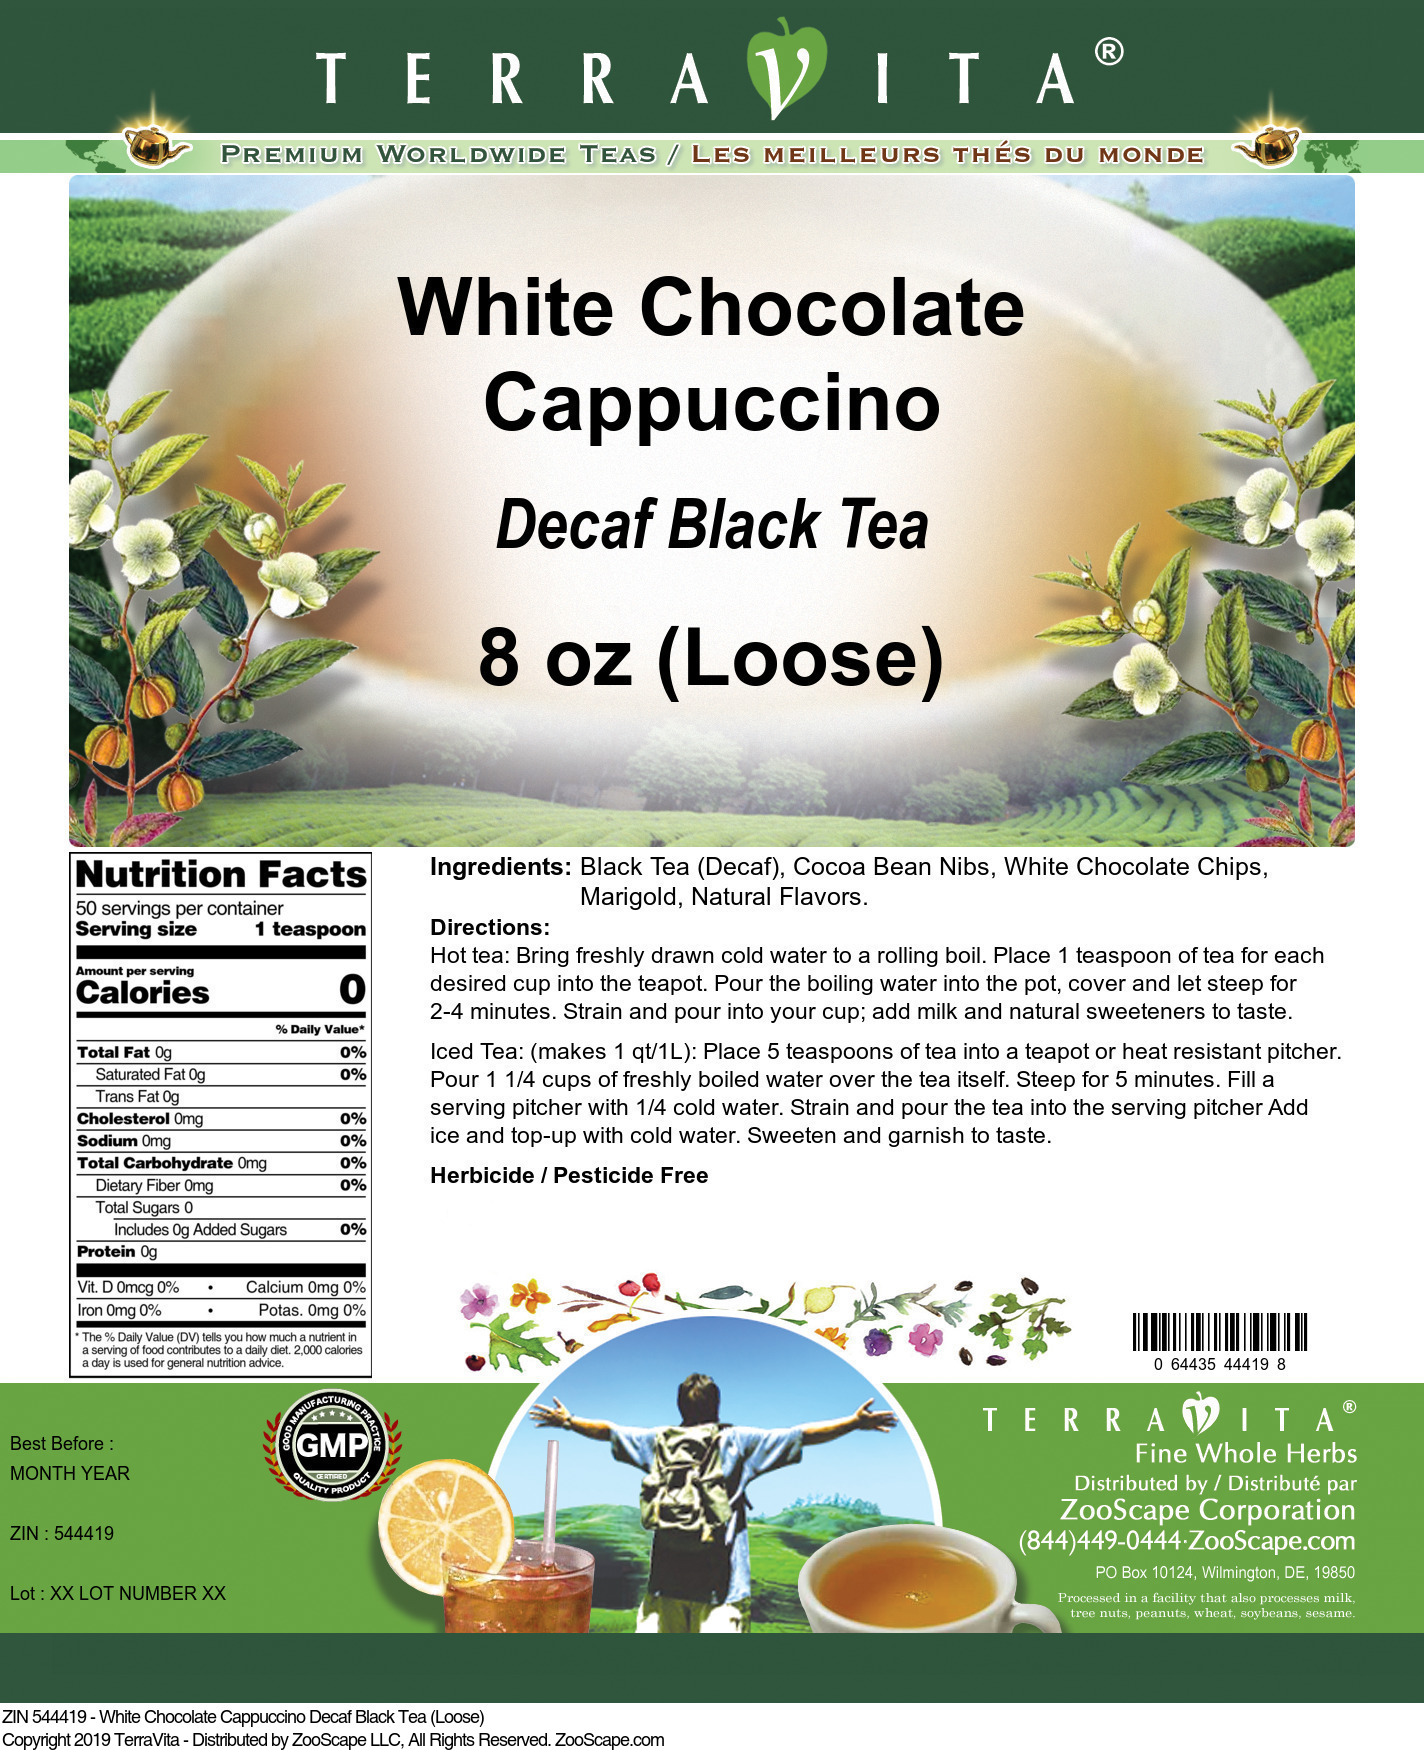 White Chocolate Cappuccino Decaf Black Tea (Loose) - Label